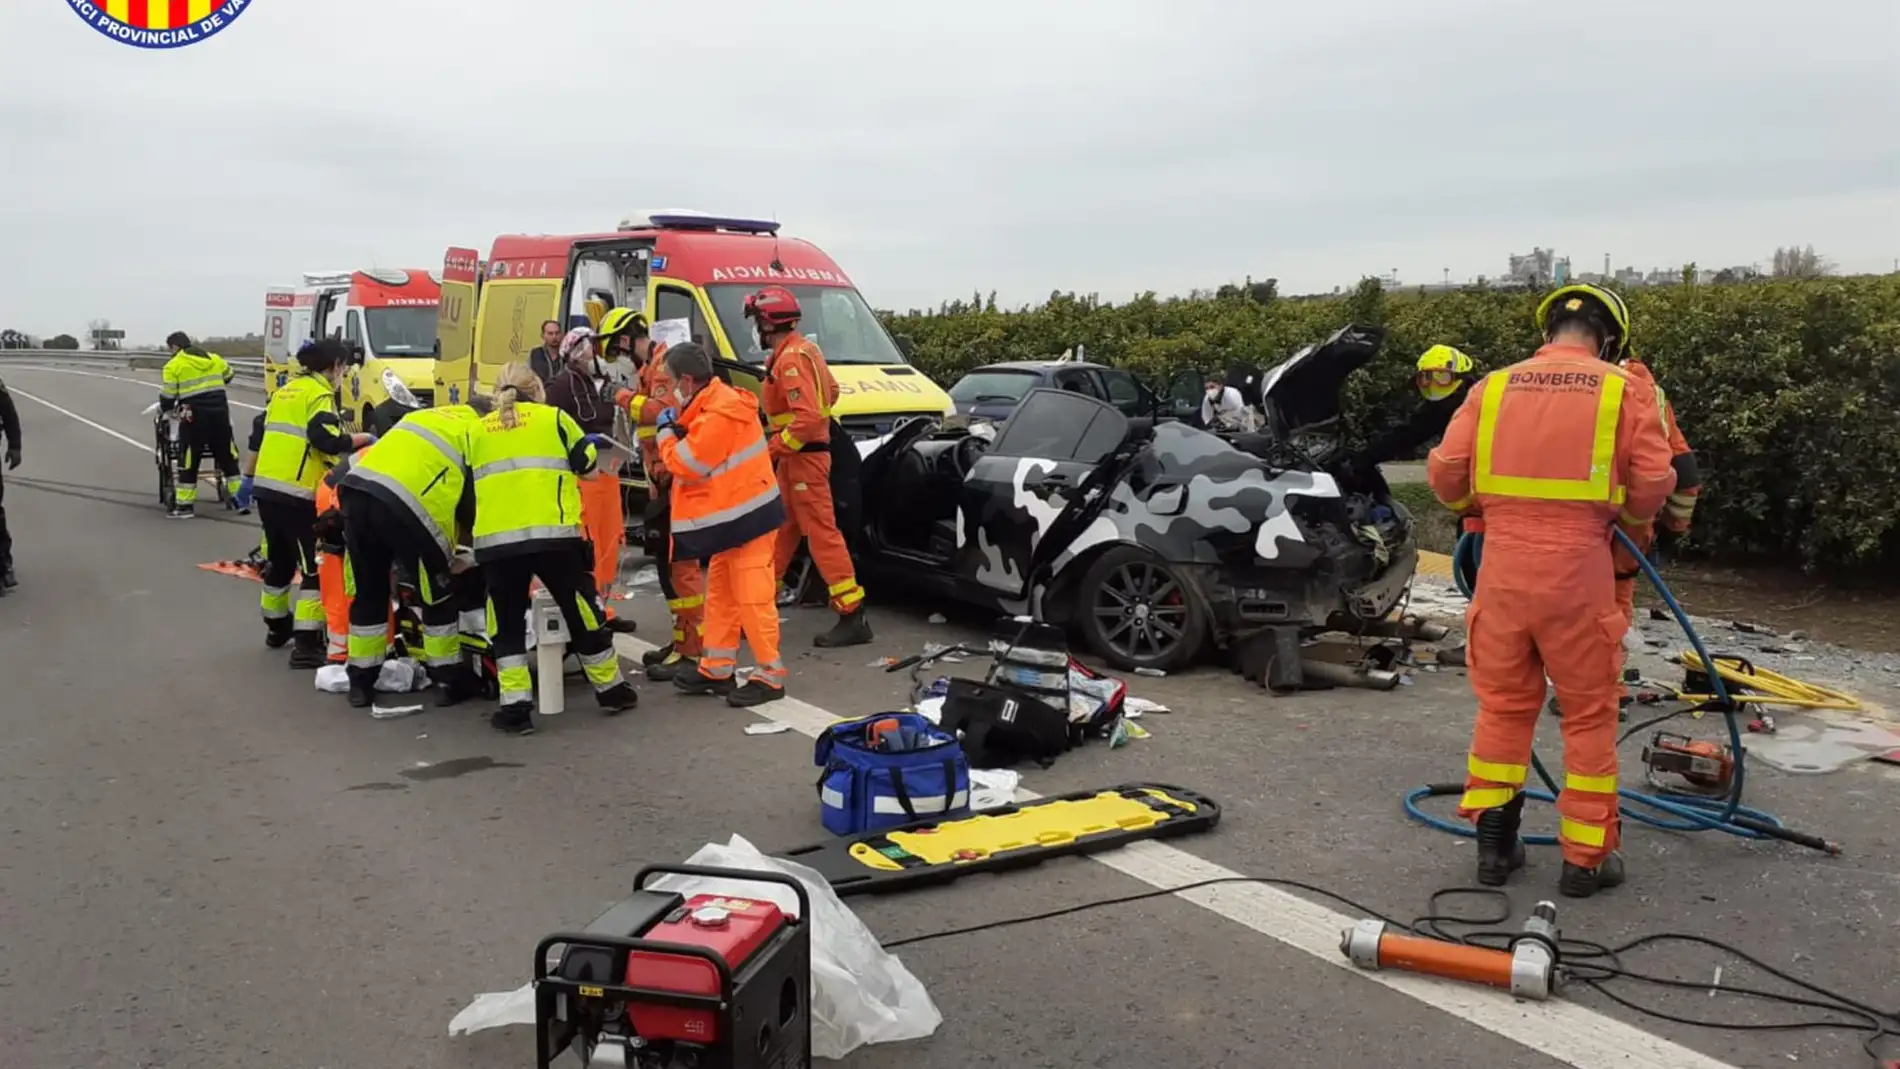 Aparatoso accidente con seis heridos en la carretera que une Sagunto con Canet d'en Berenguer